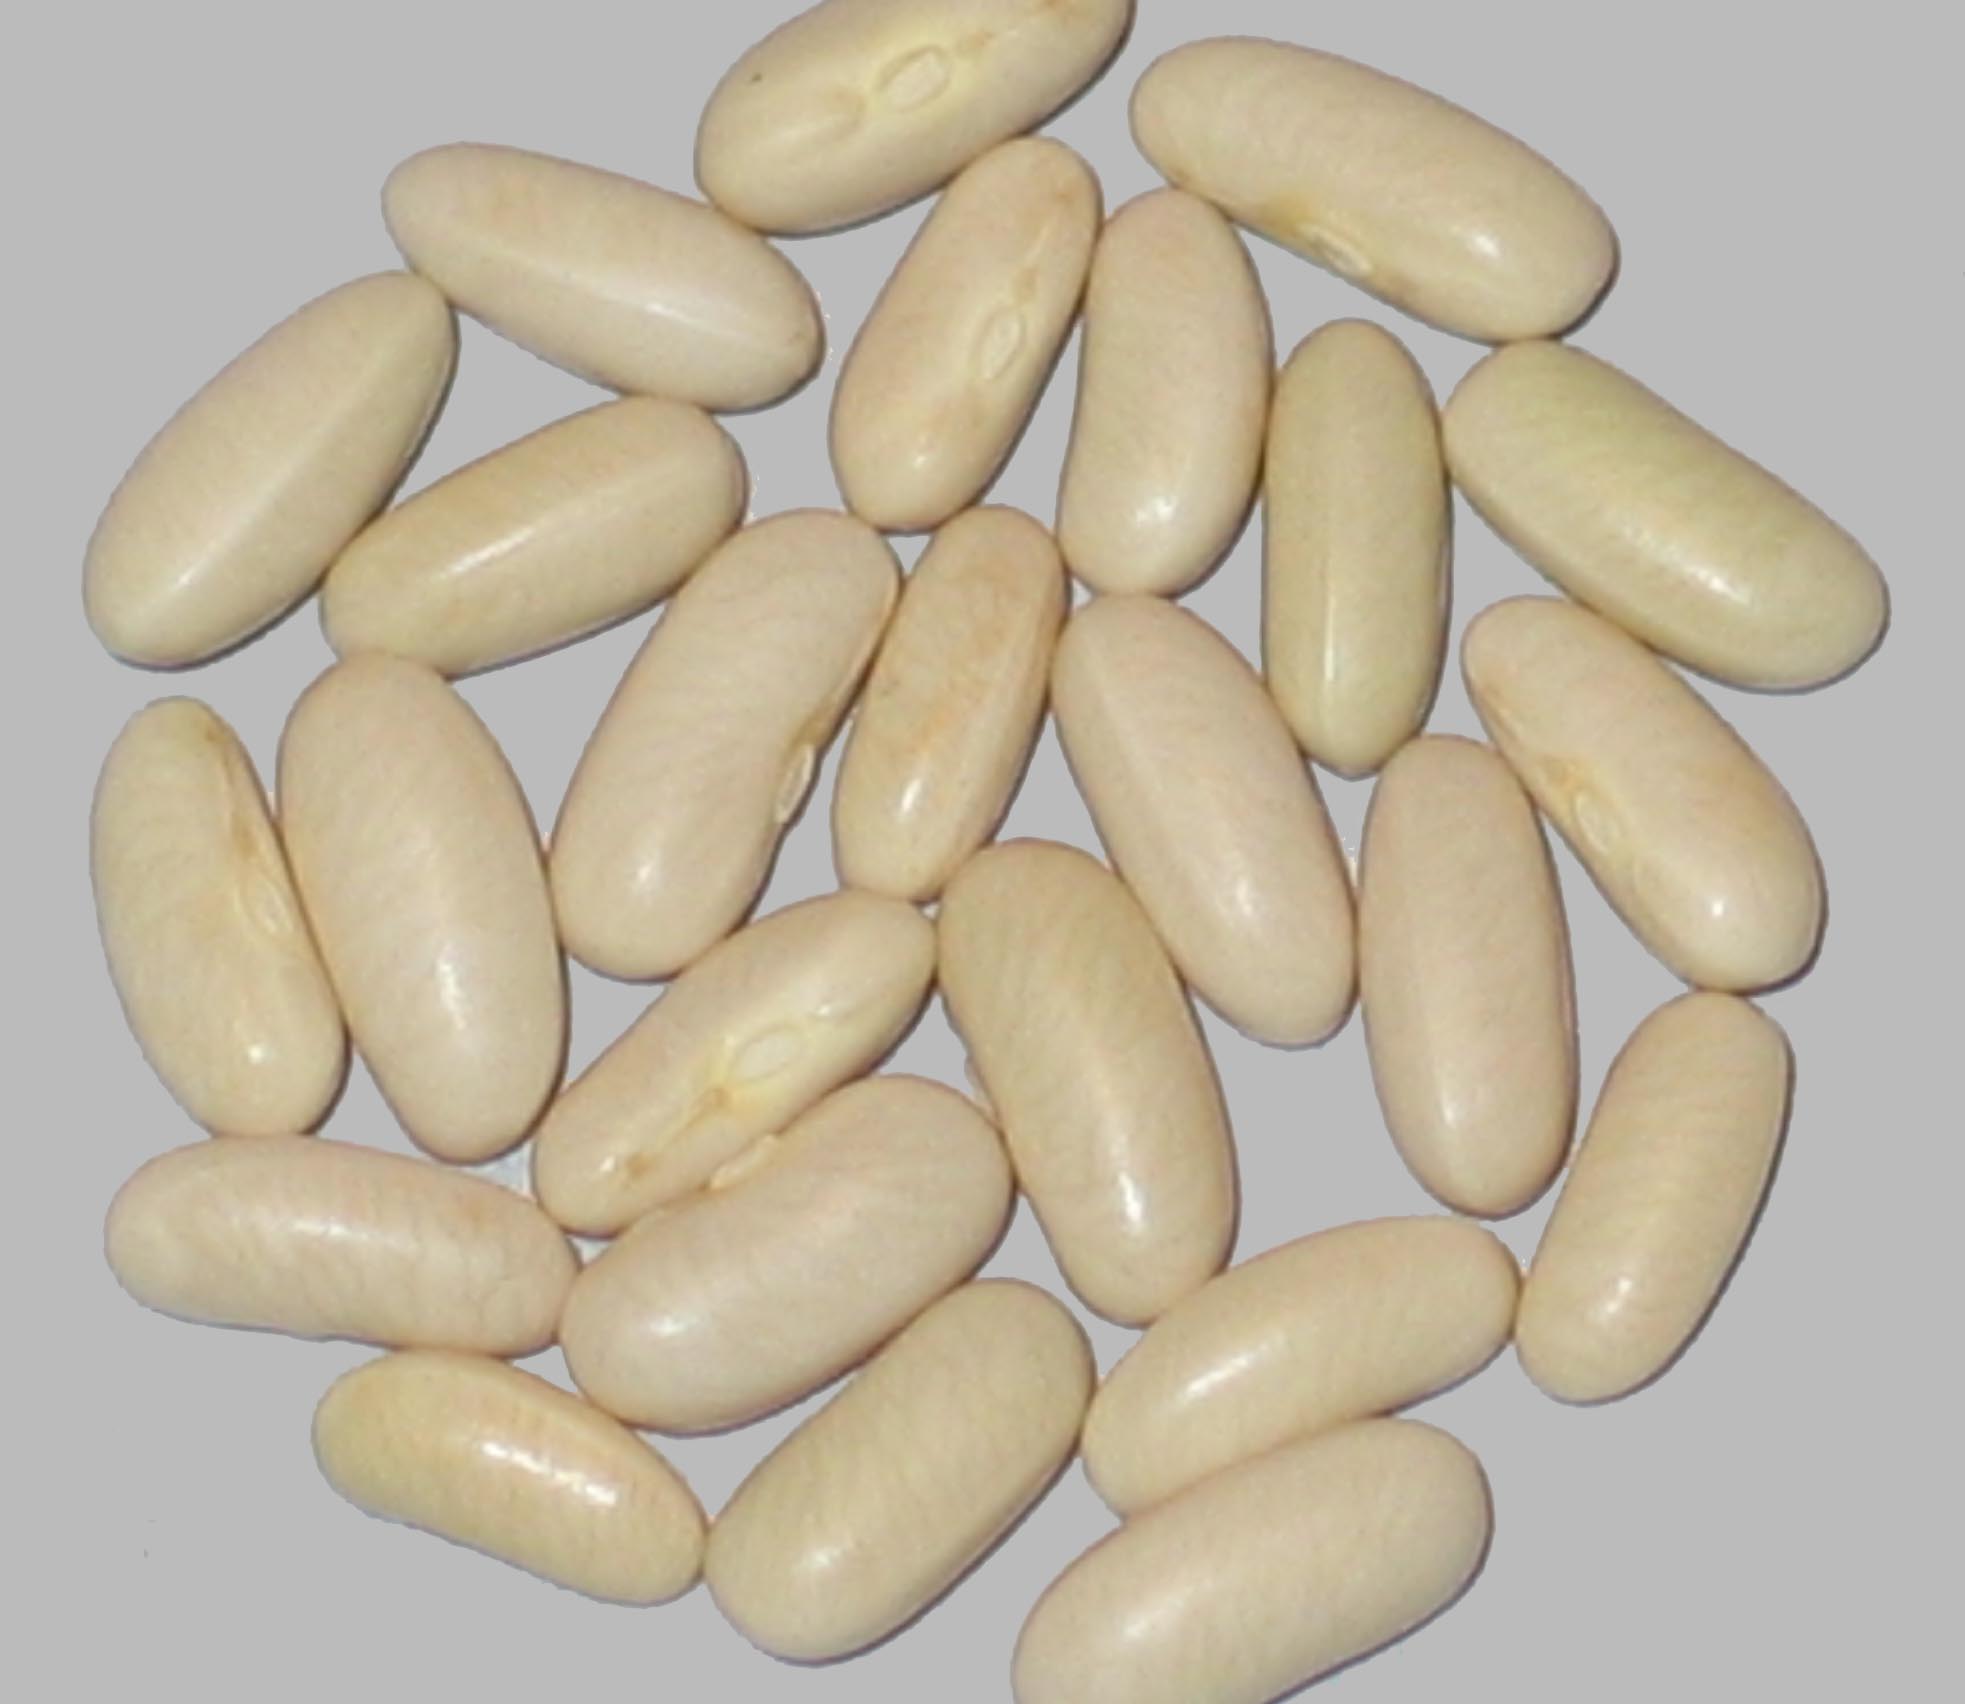 image of Yaris beans